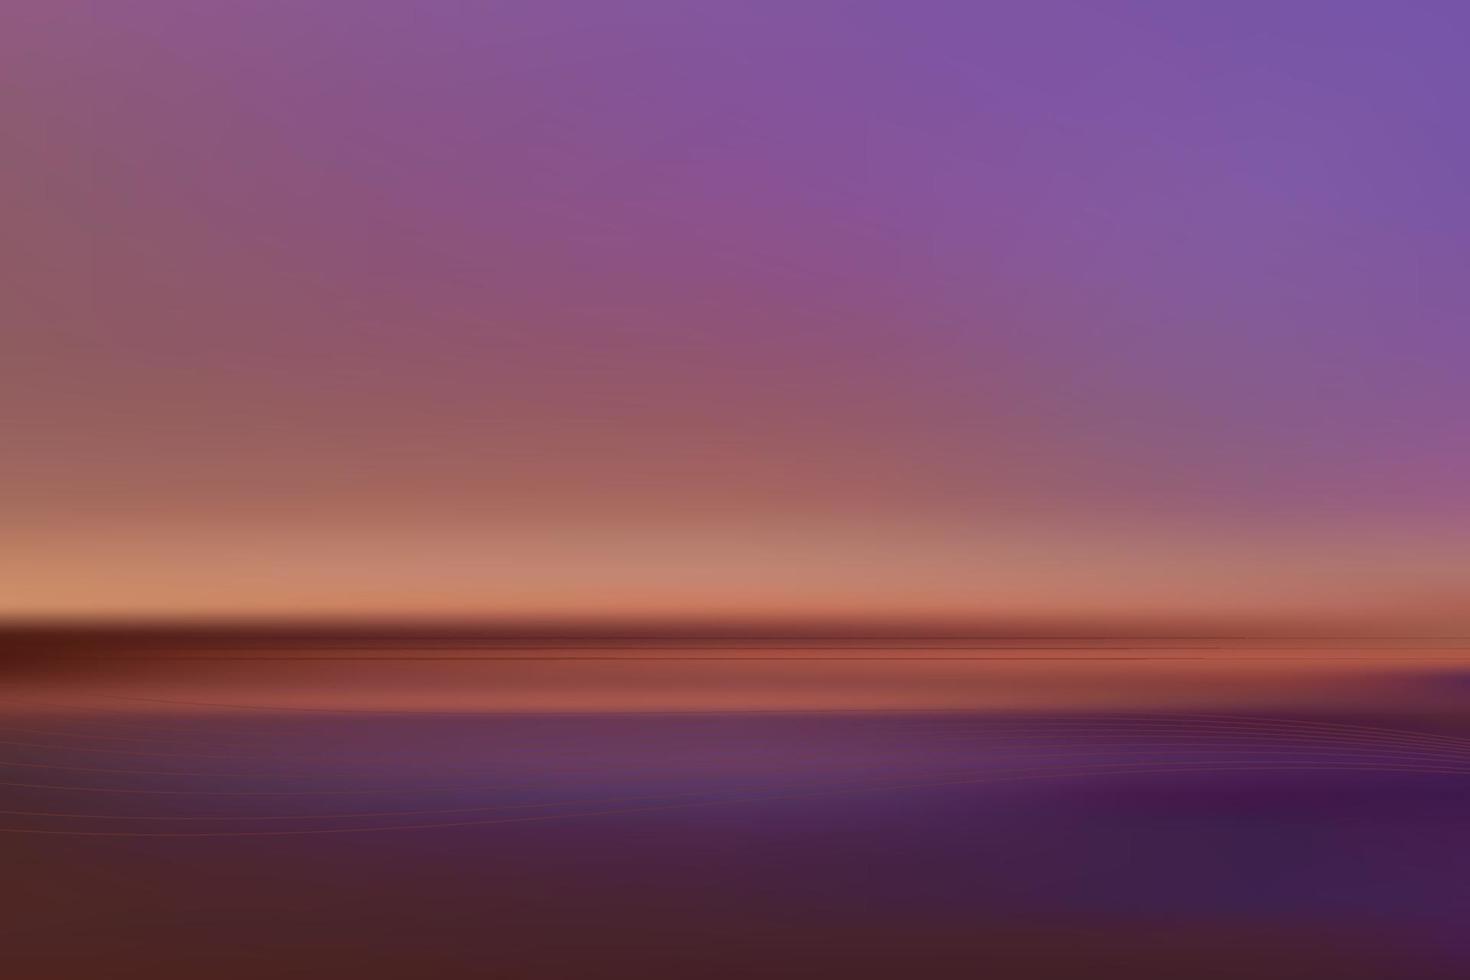 Sommer Sonnenaufgang Hintergrund vektor